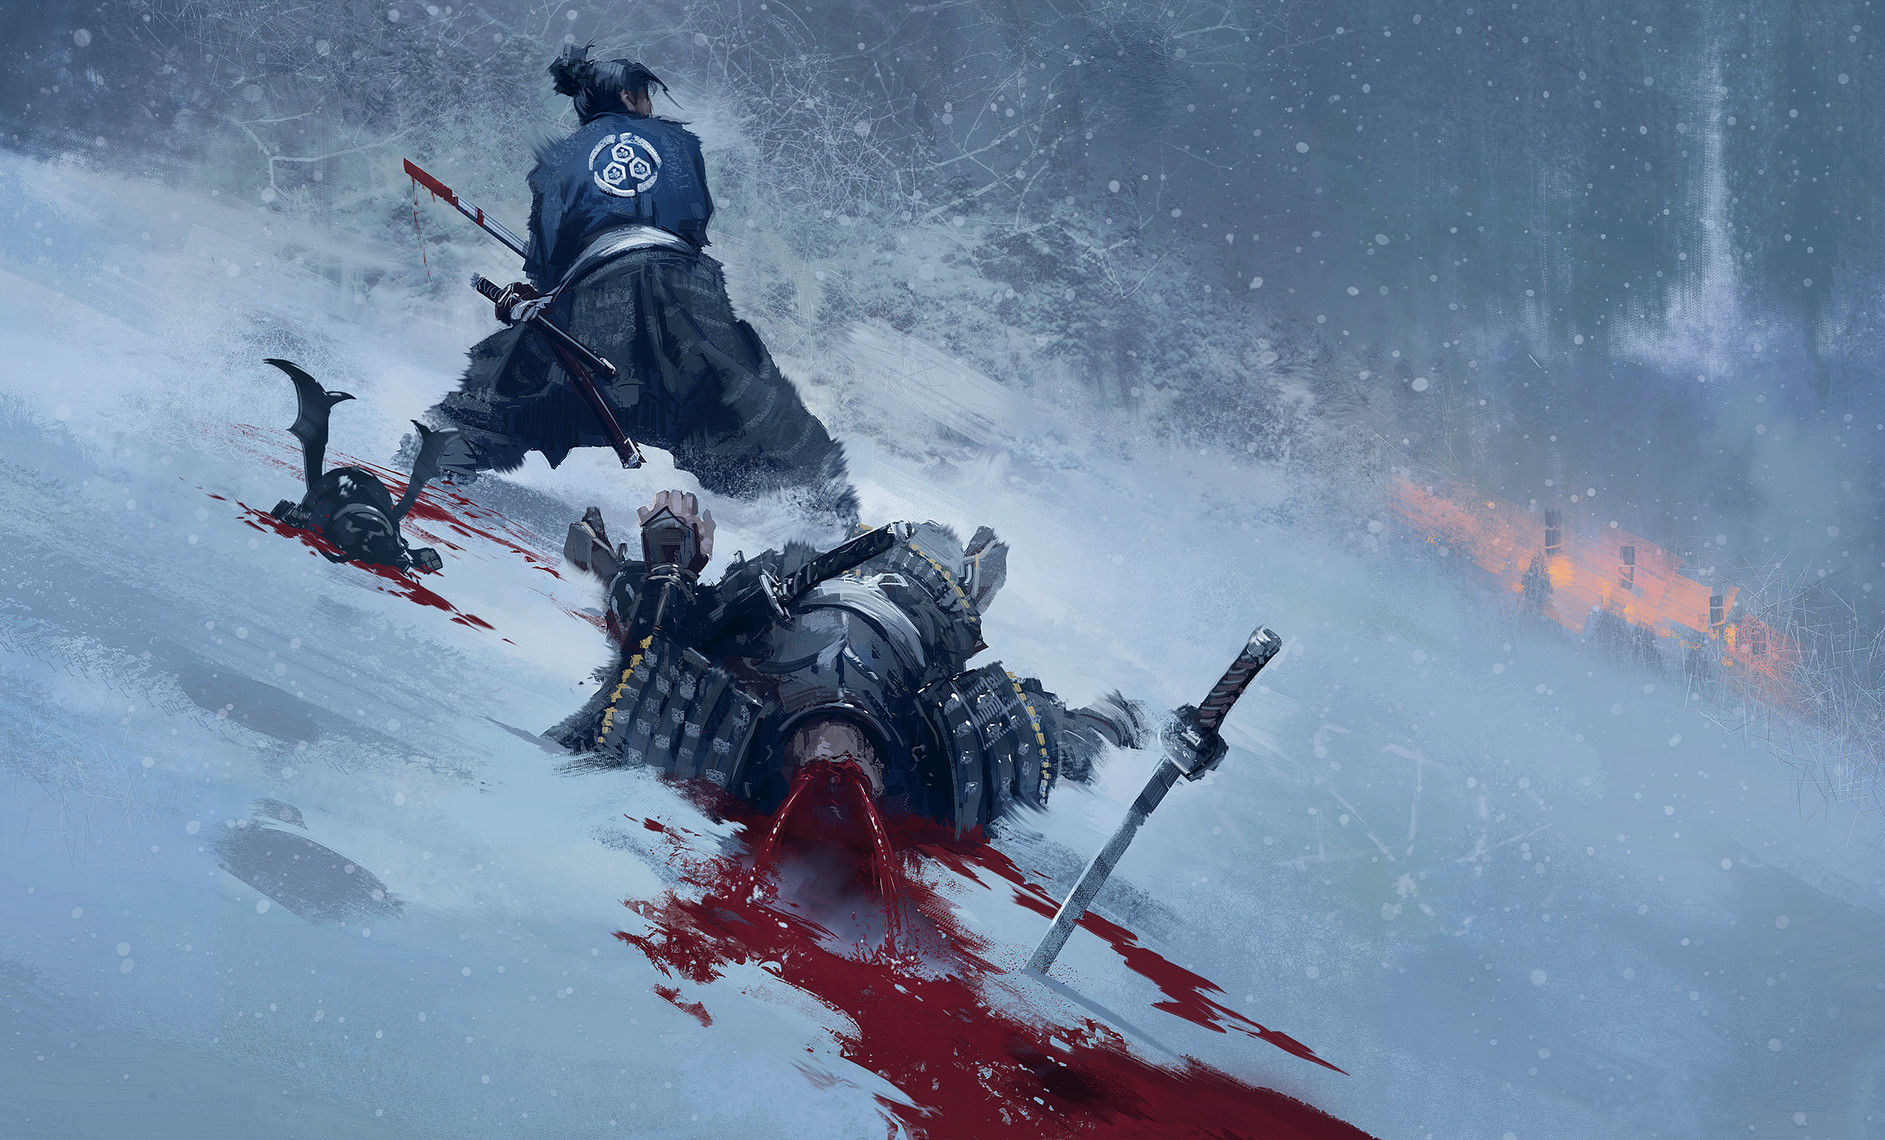 General 1885x1140 Joakim Ericsson artwork digital art illustration painting concept art warrior samurai katana beheading blood snowing snow 2D Duel